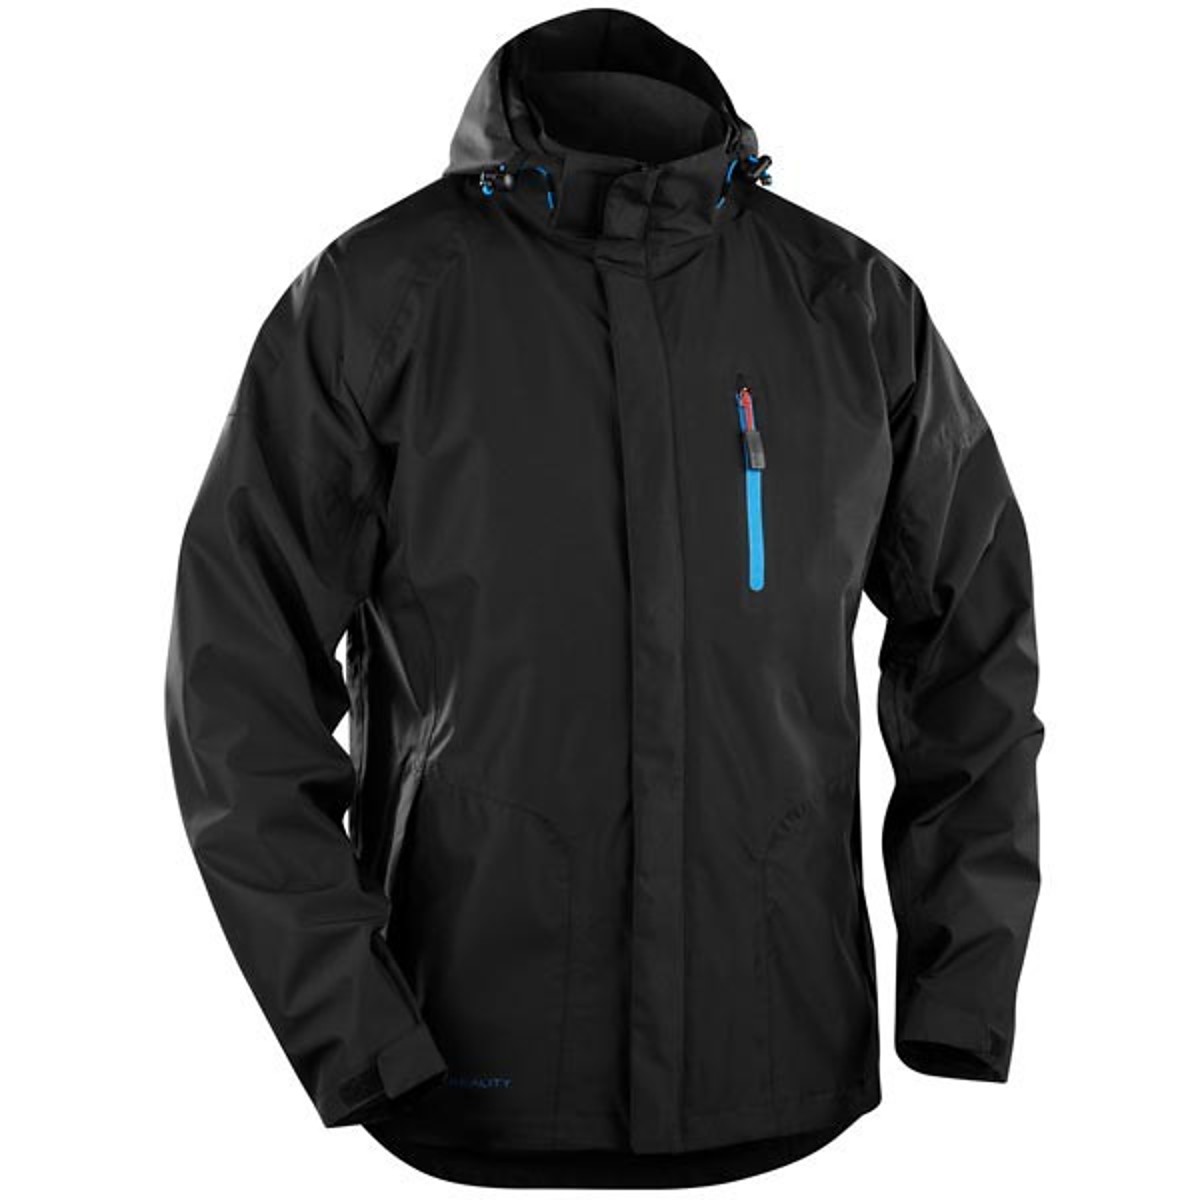 Rain jacket waterproof breathable